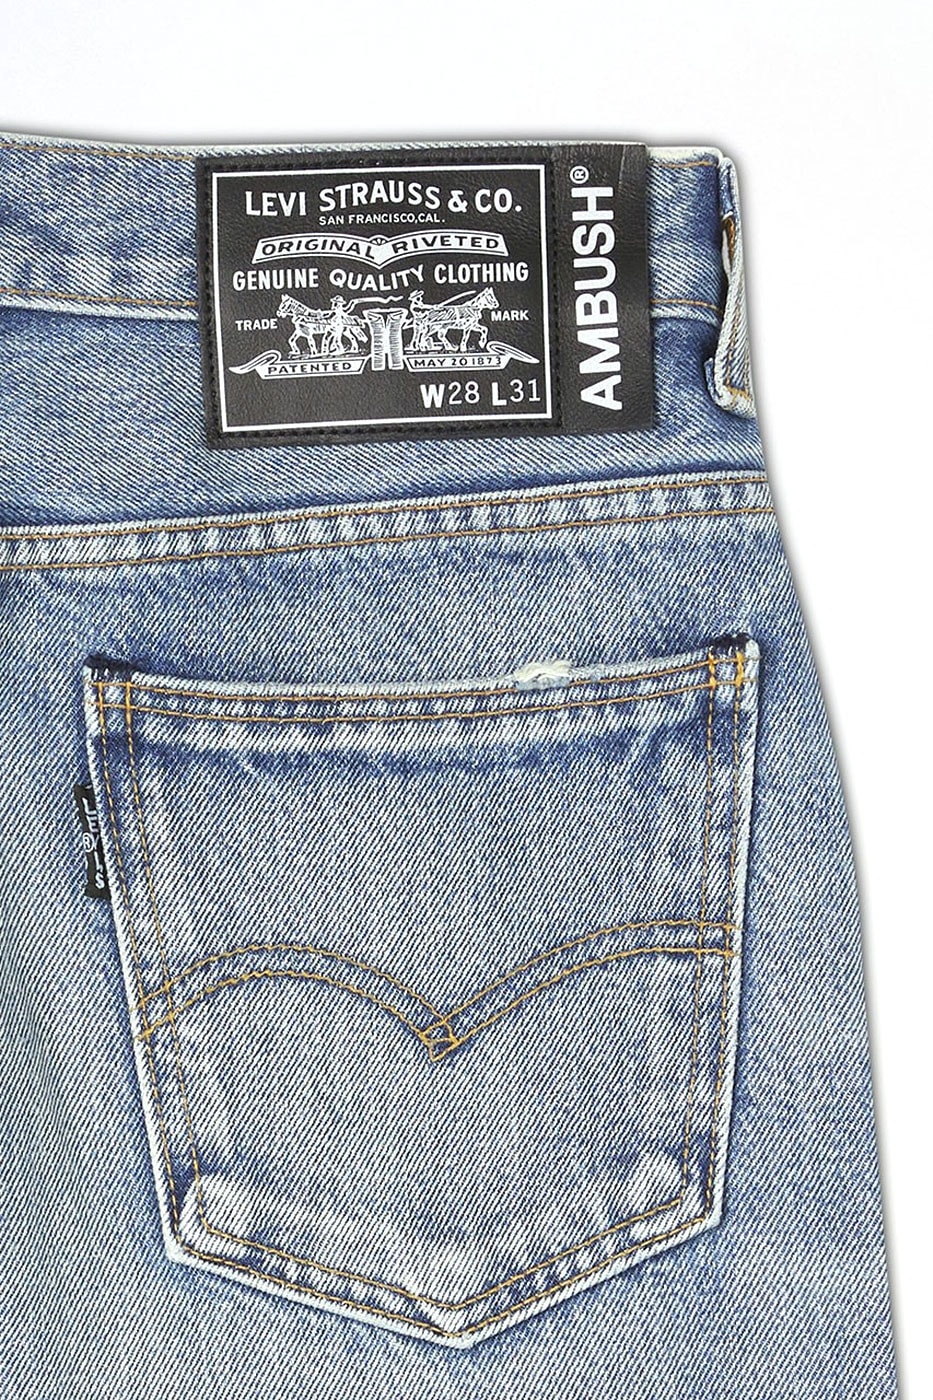 AMBUSH Levi's loose fit trucker jacket indigo bottle cap buttons tool buttons black silver boot cut 517 release info date price